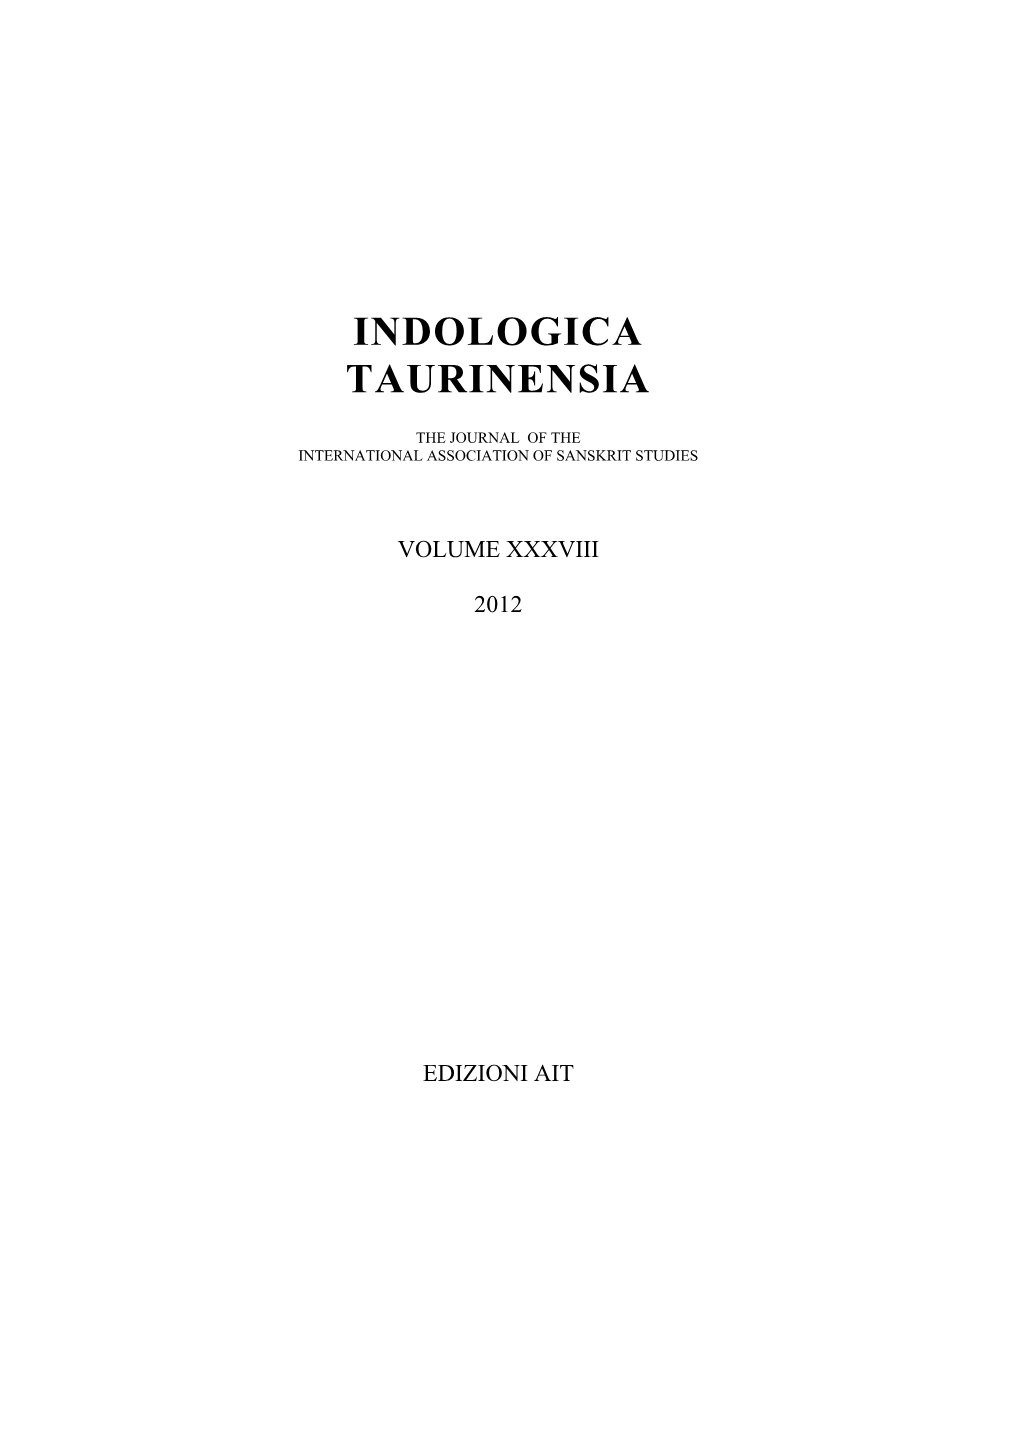 Indologica Taurinensia